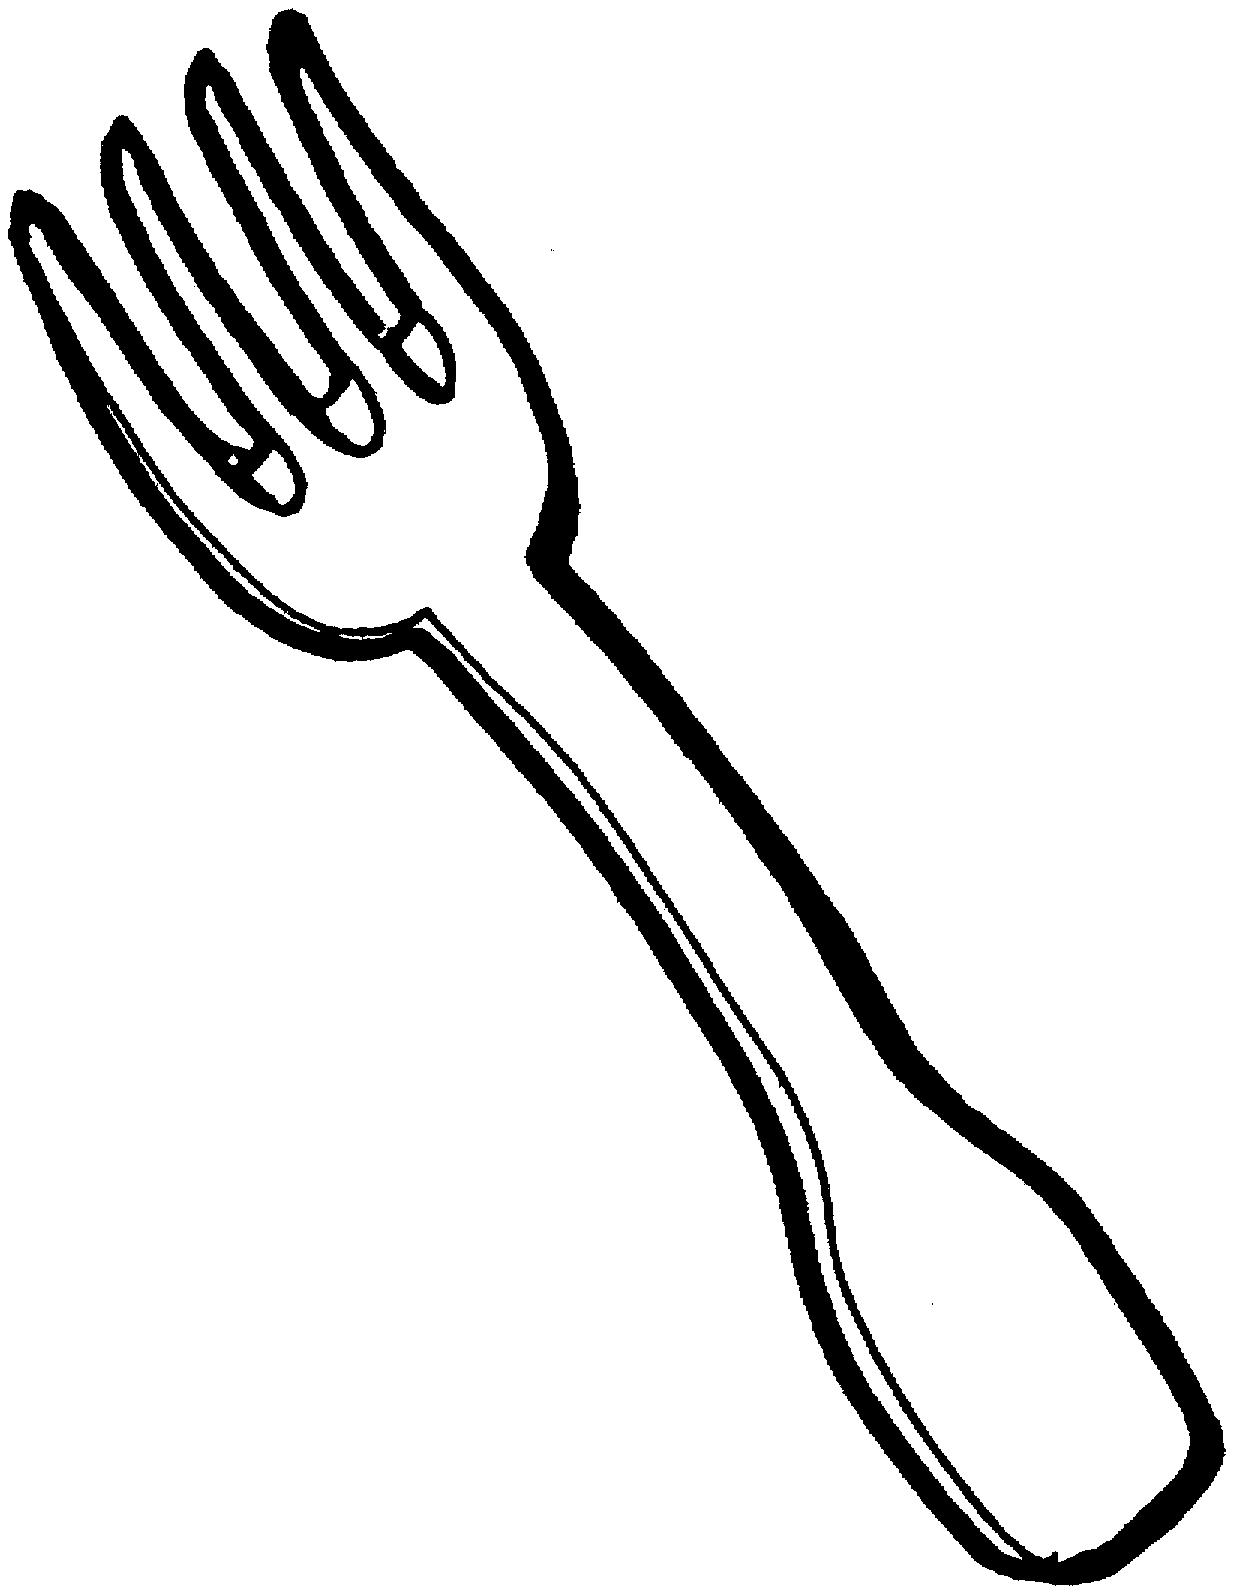 Knife and fork clip art clipa